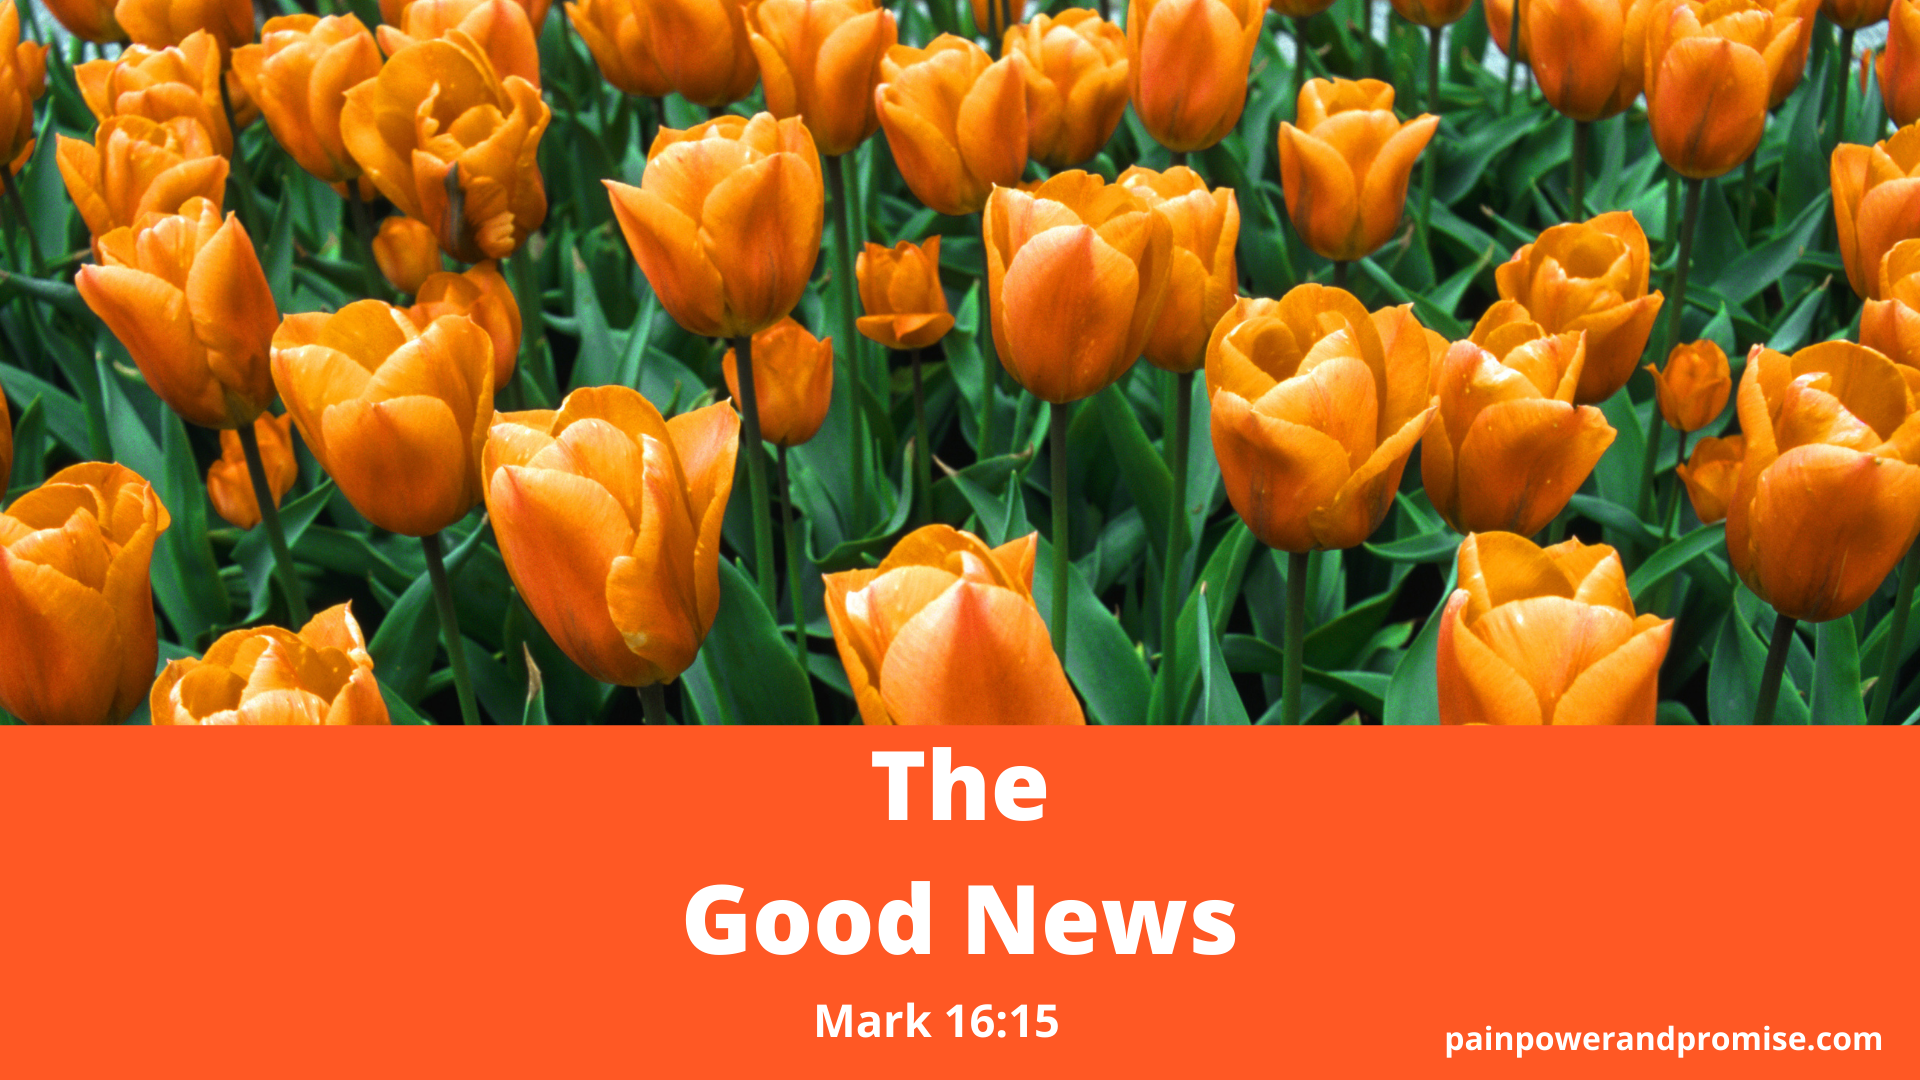 Inspirational Message: The Good News: Mark 16:15